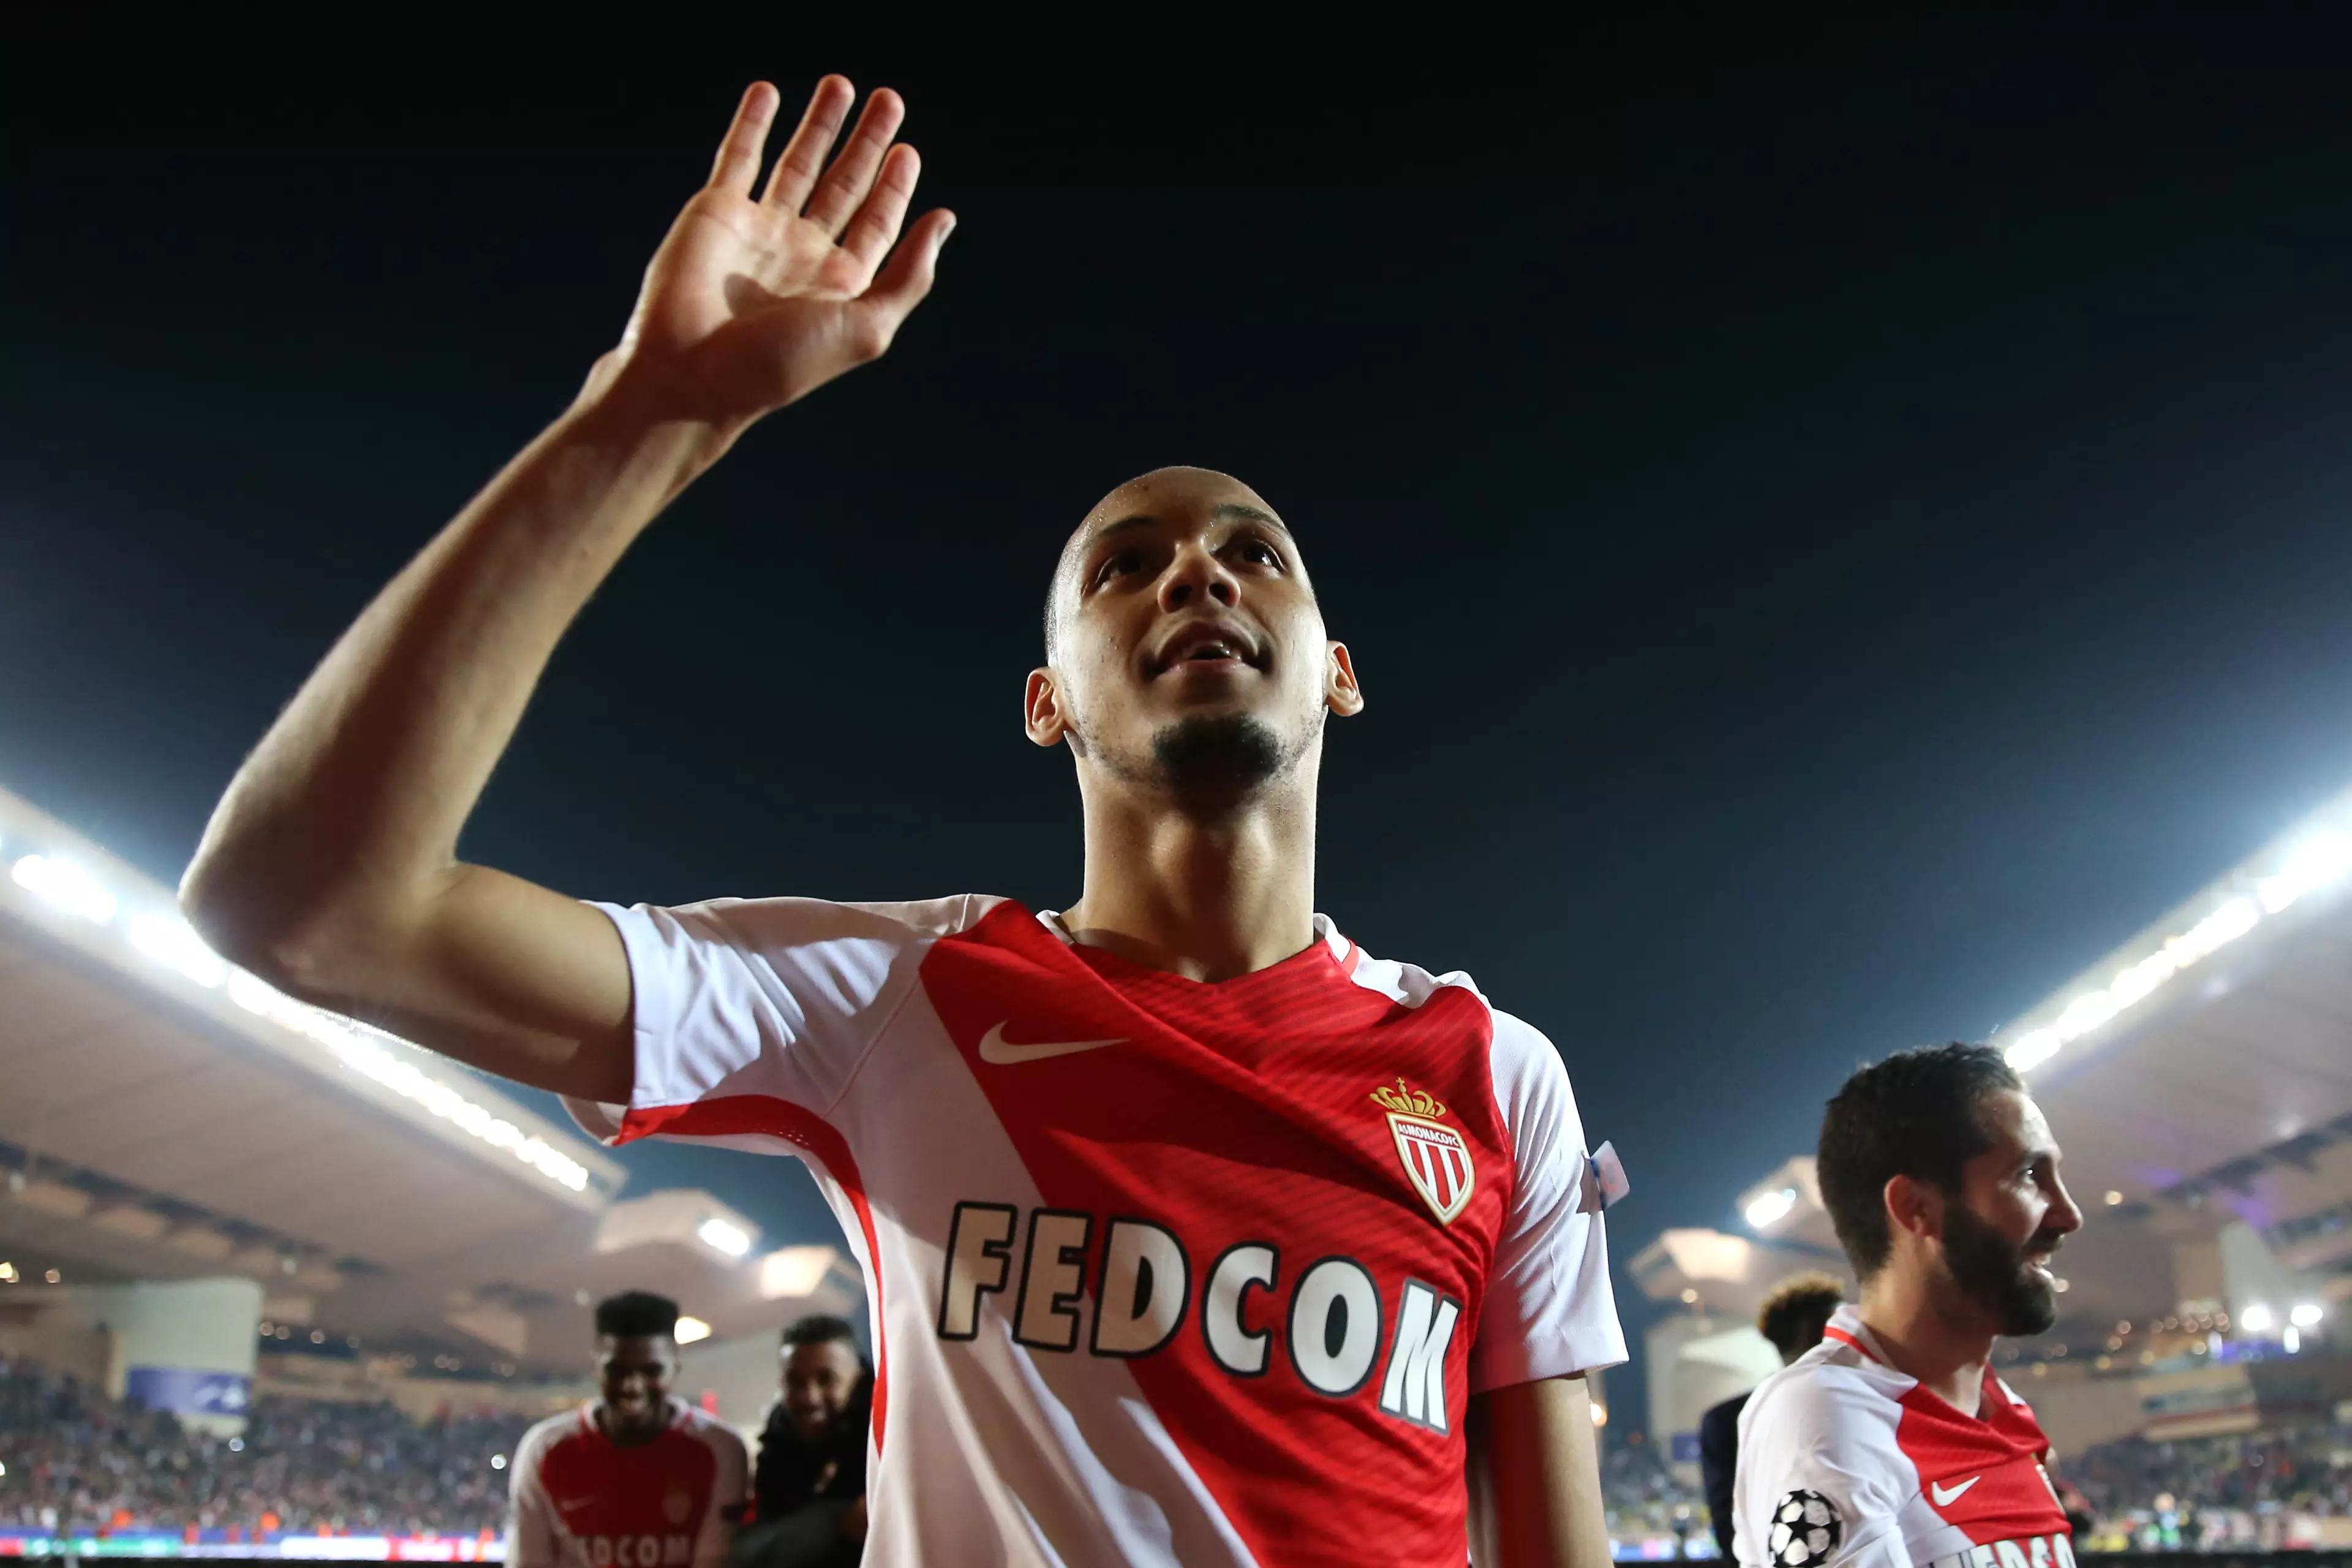 Fabinho was part of the Monaco side that won the 2016/17 Ligue 1 title. Image: PA Images